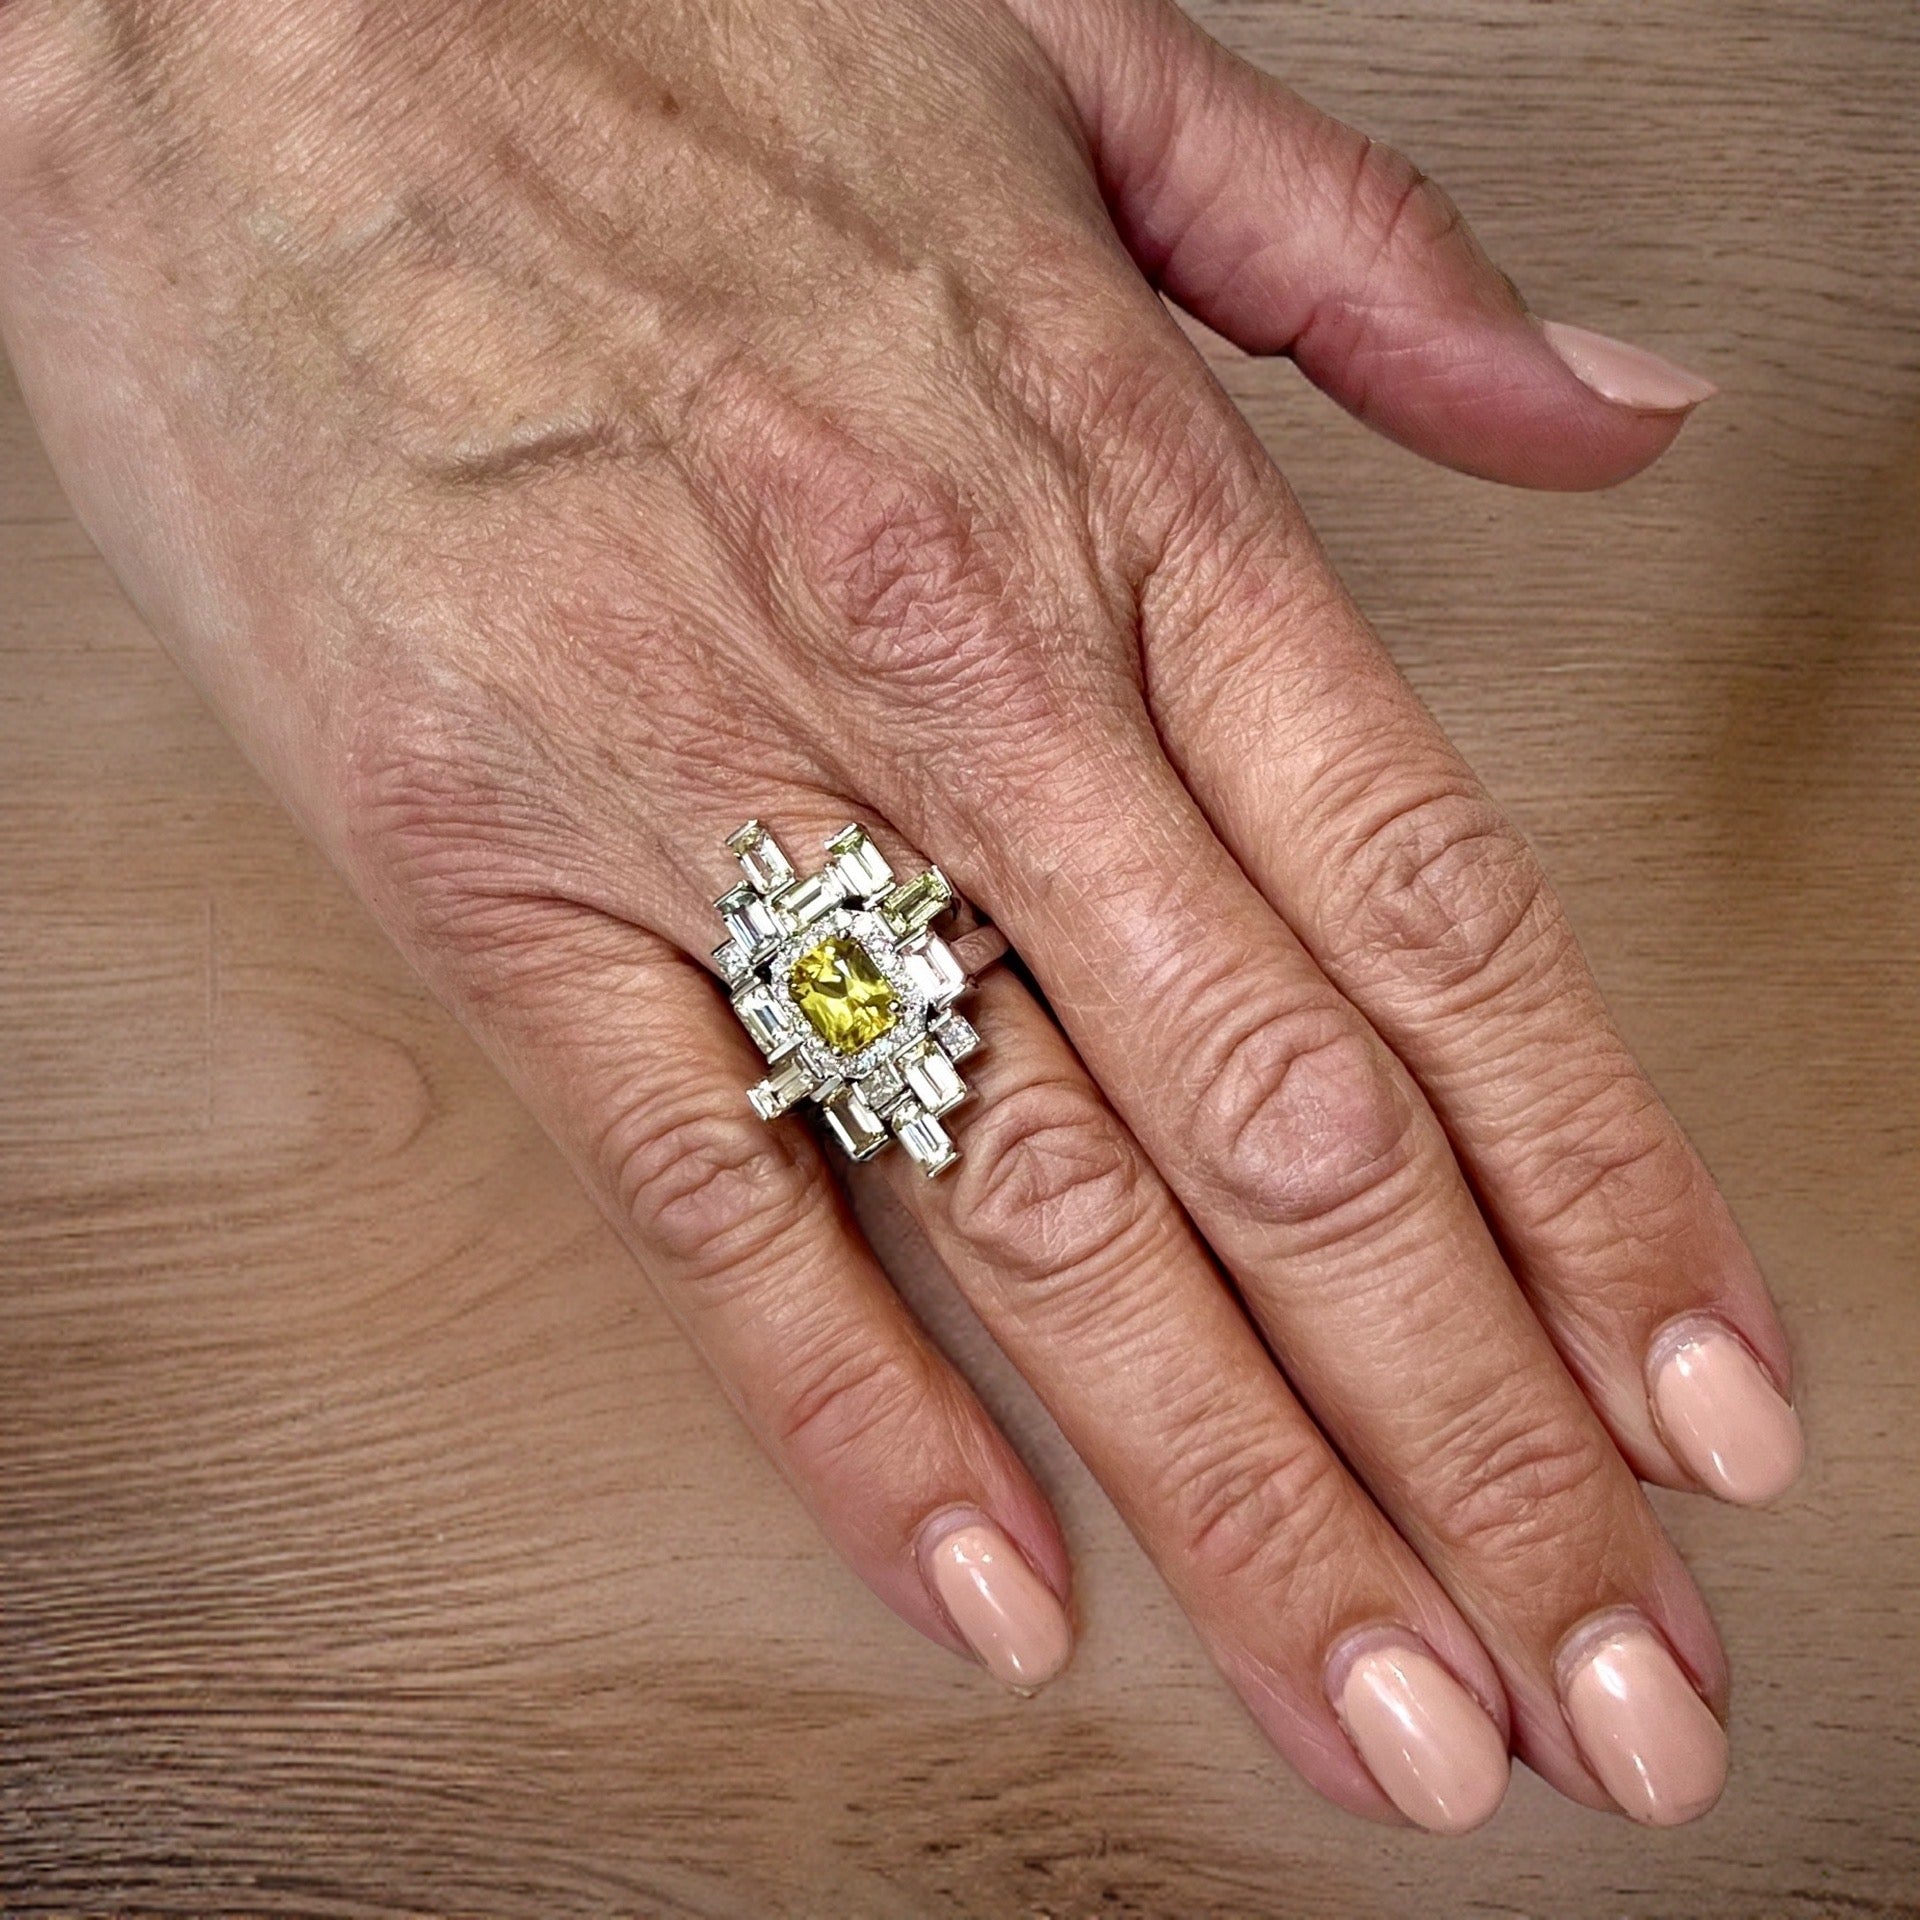 Natural Sapphire Diamond Ring 6.75 14k W Gold 13.3 TCW Certified $7,975 301438 - Certified Fine Jewelry